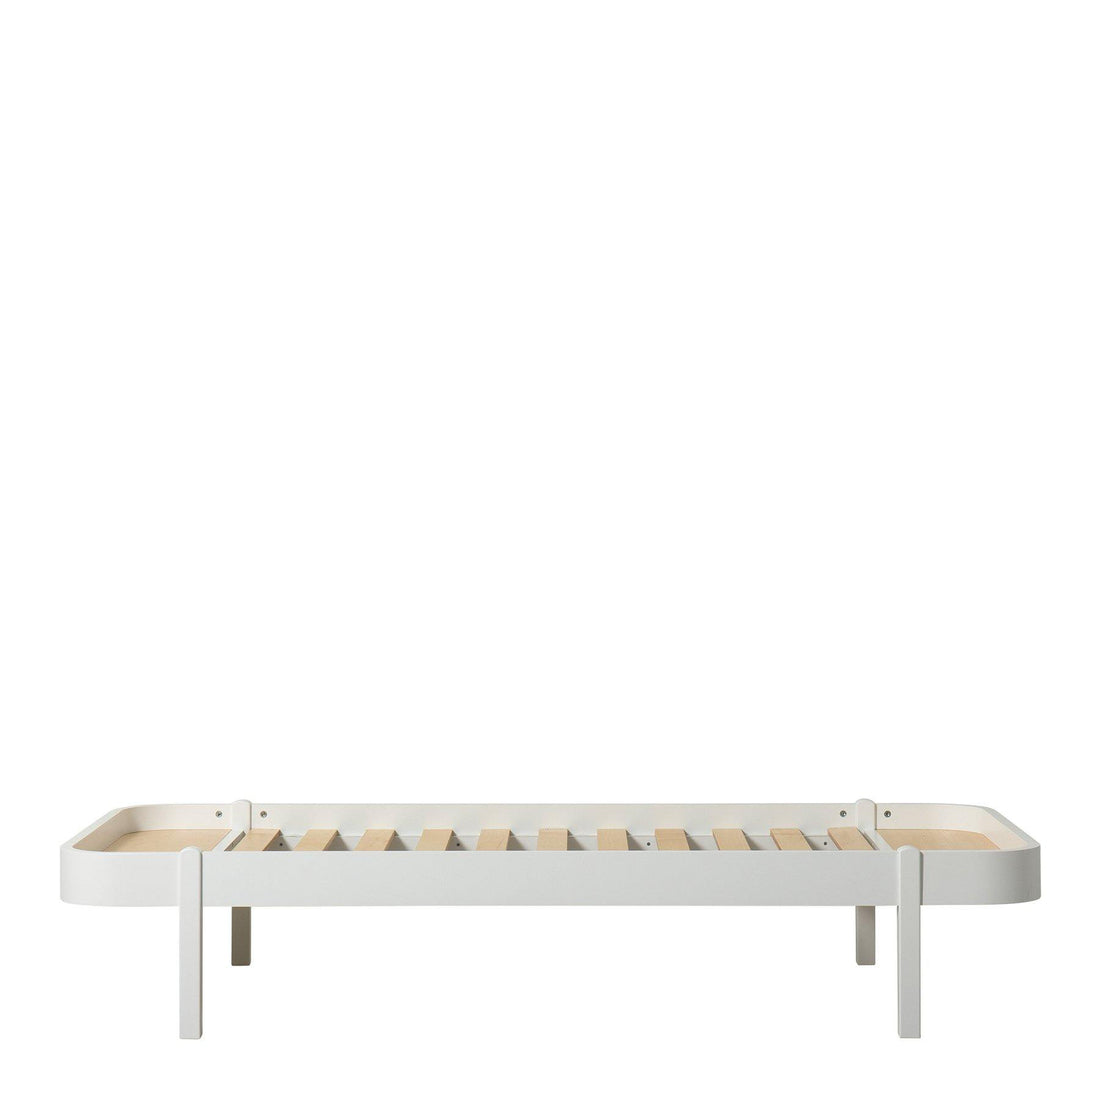 oliver-furniture-wood-lounger-bed-90-white- (1)